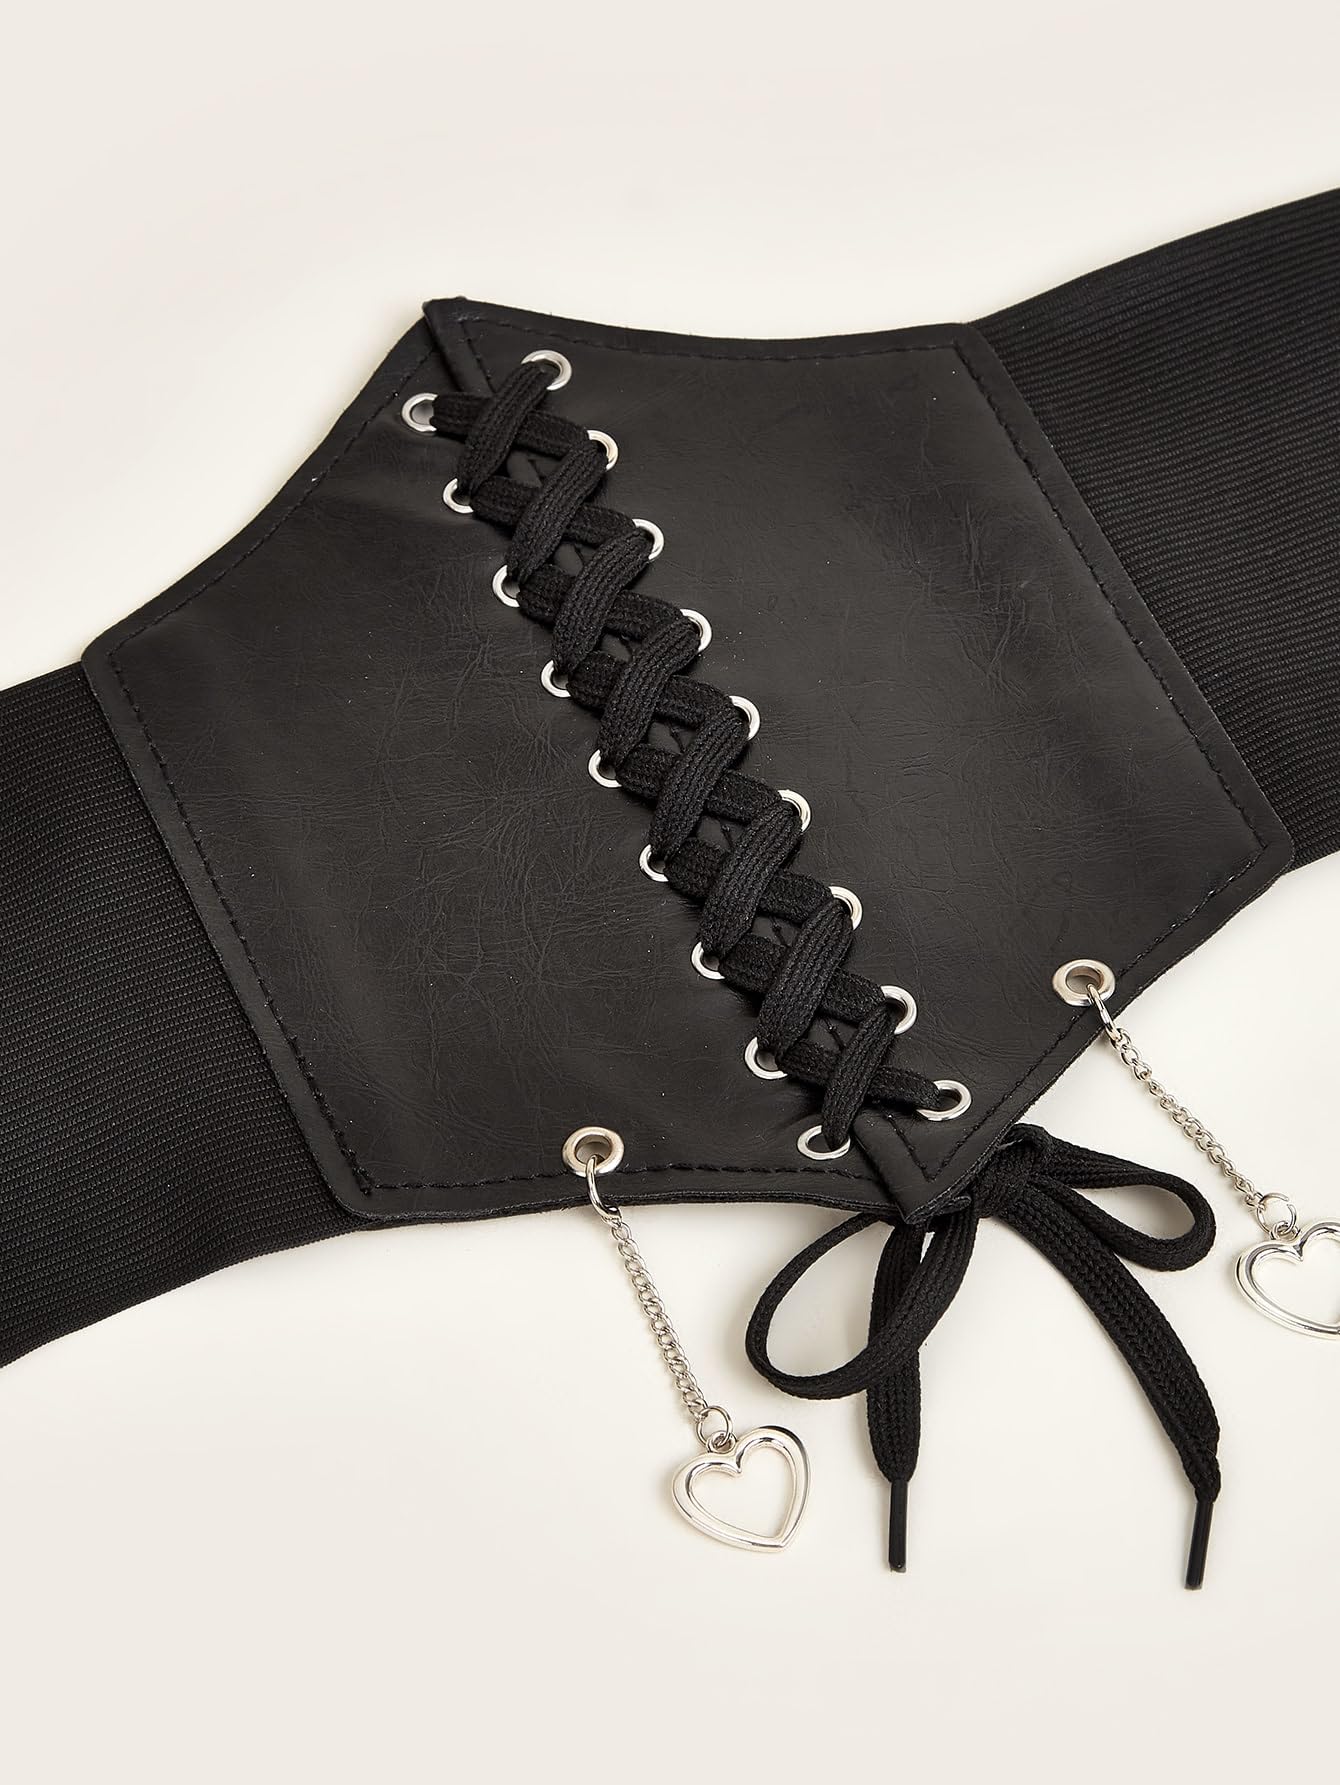 Verdusa Women's Costume Belt Vintage Lace Up Wide Waistband PU Leather Punk Corset Metal Heart Black M